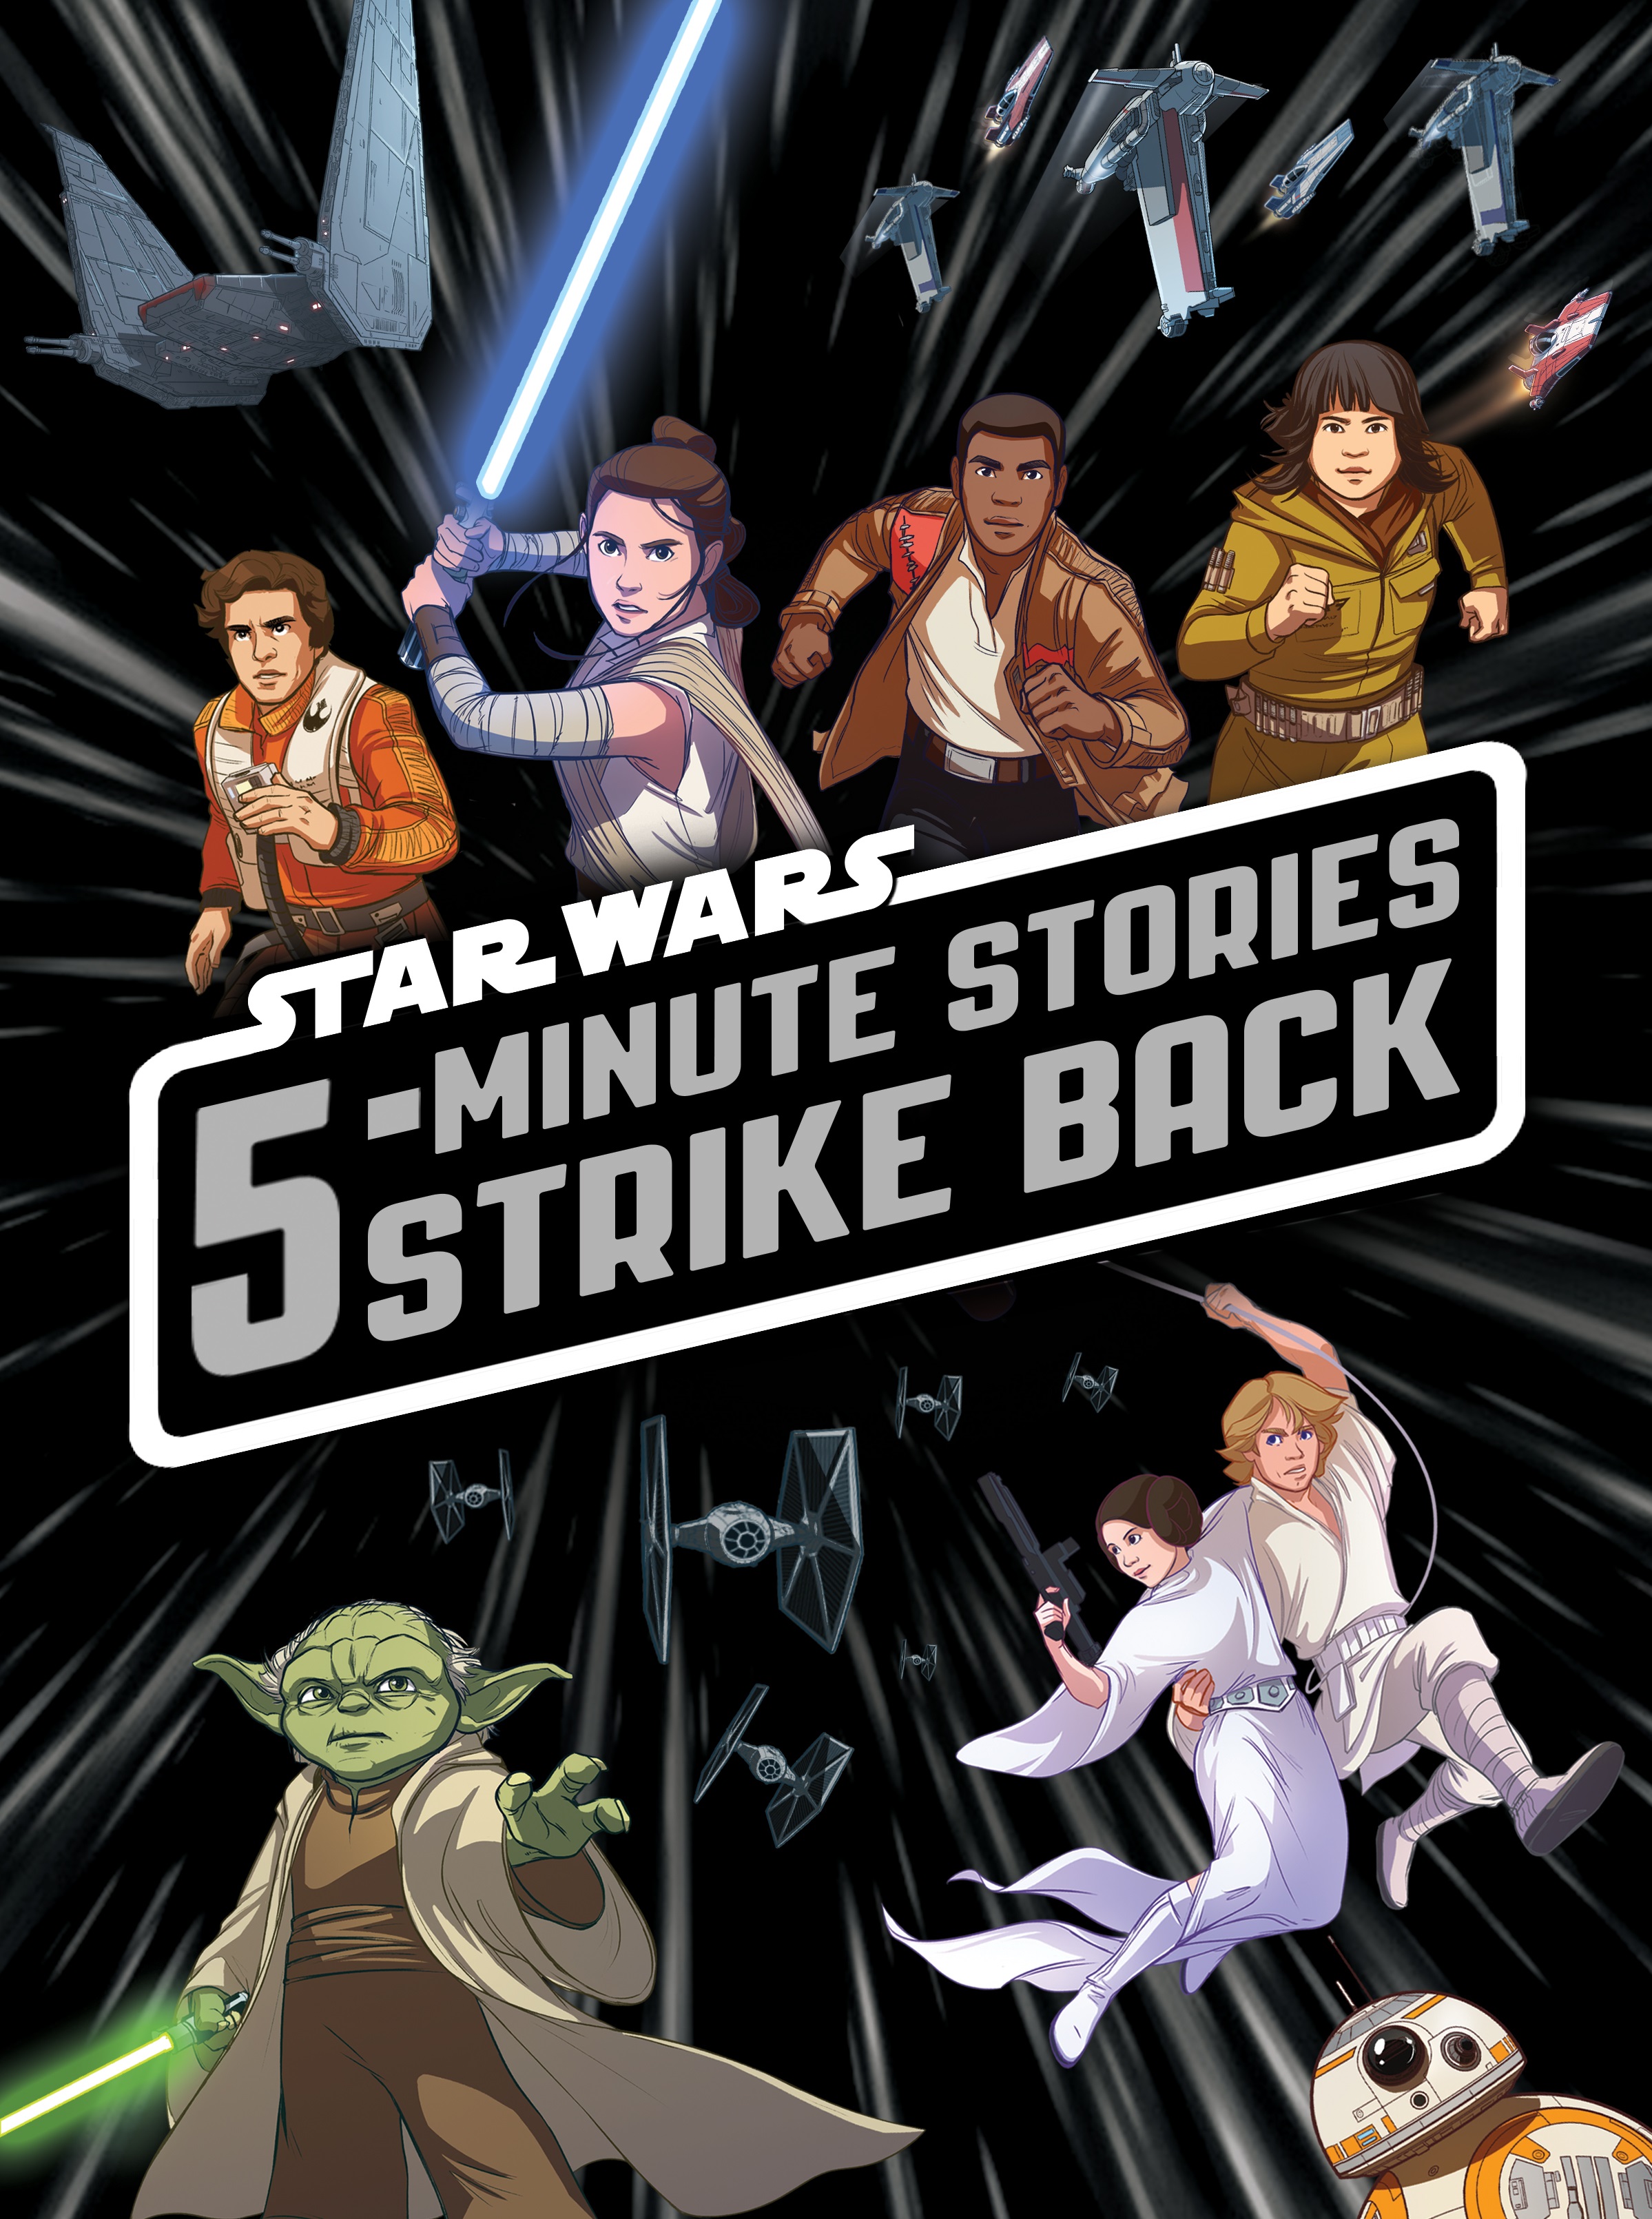 Plik:5-Minute Star Wars Stories Strikes Back final.jpg